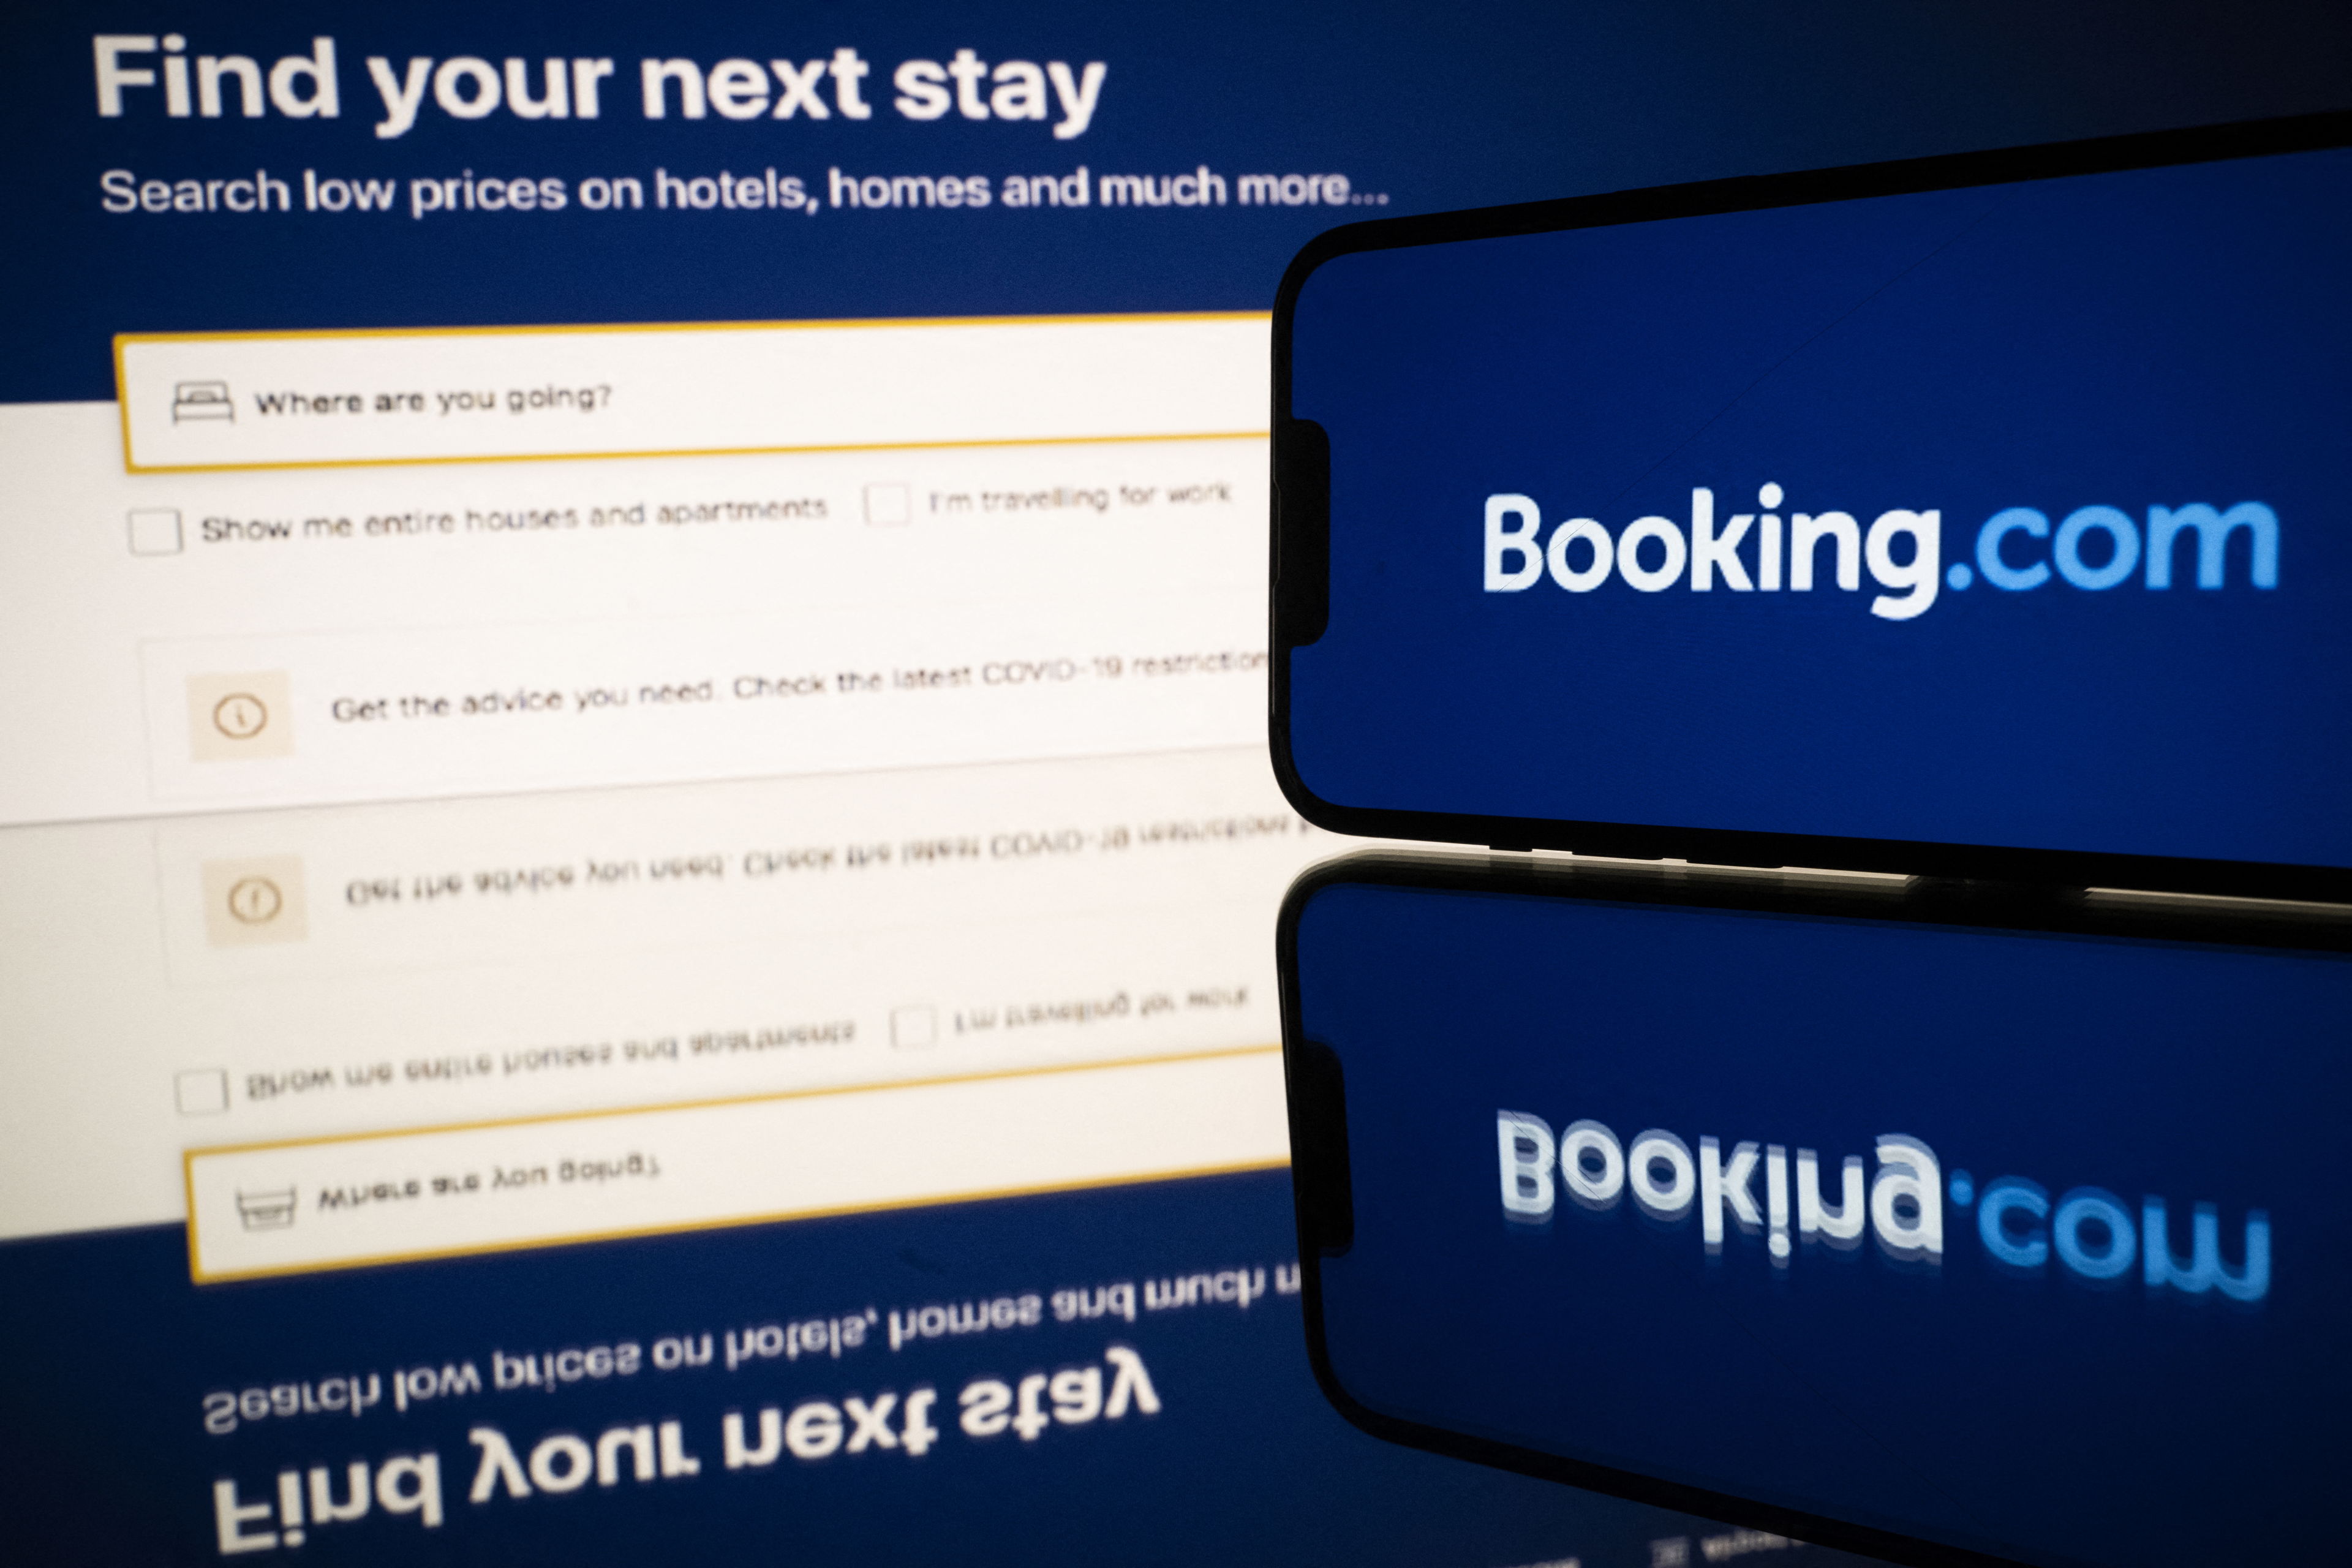 Booking.com named 'gatekeeper' under EU’s digital markets law